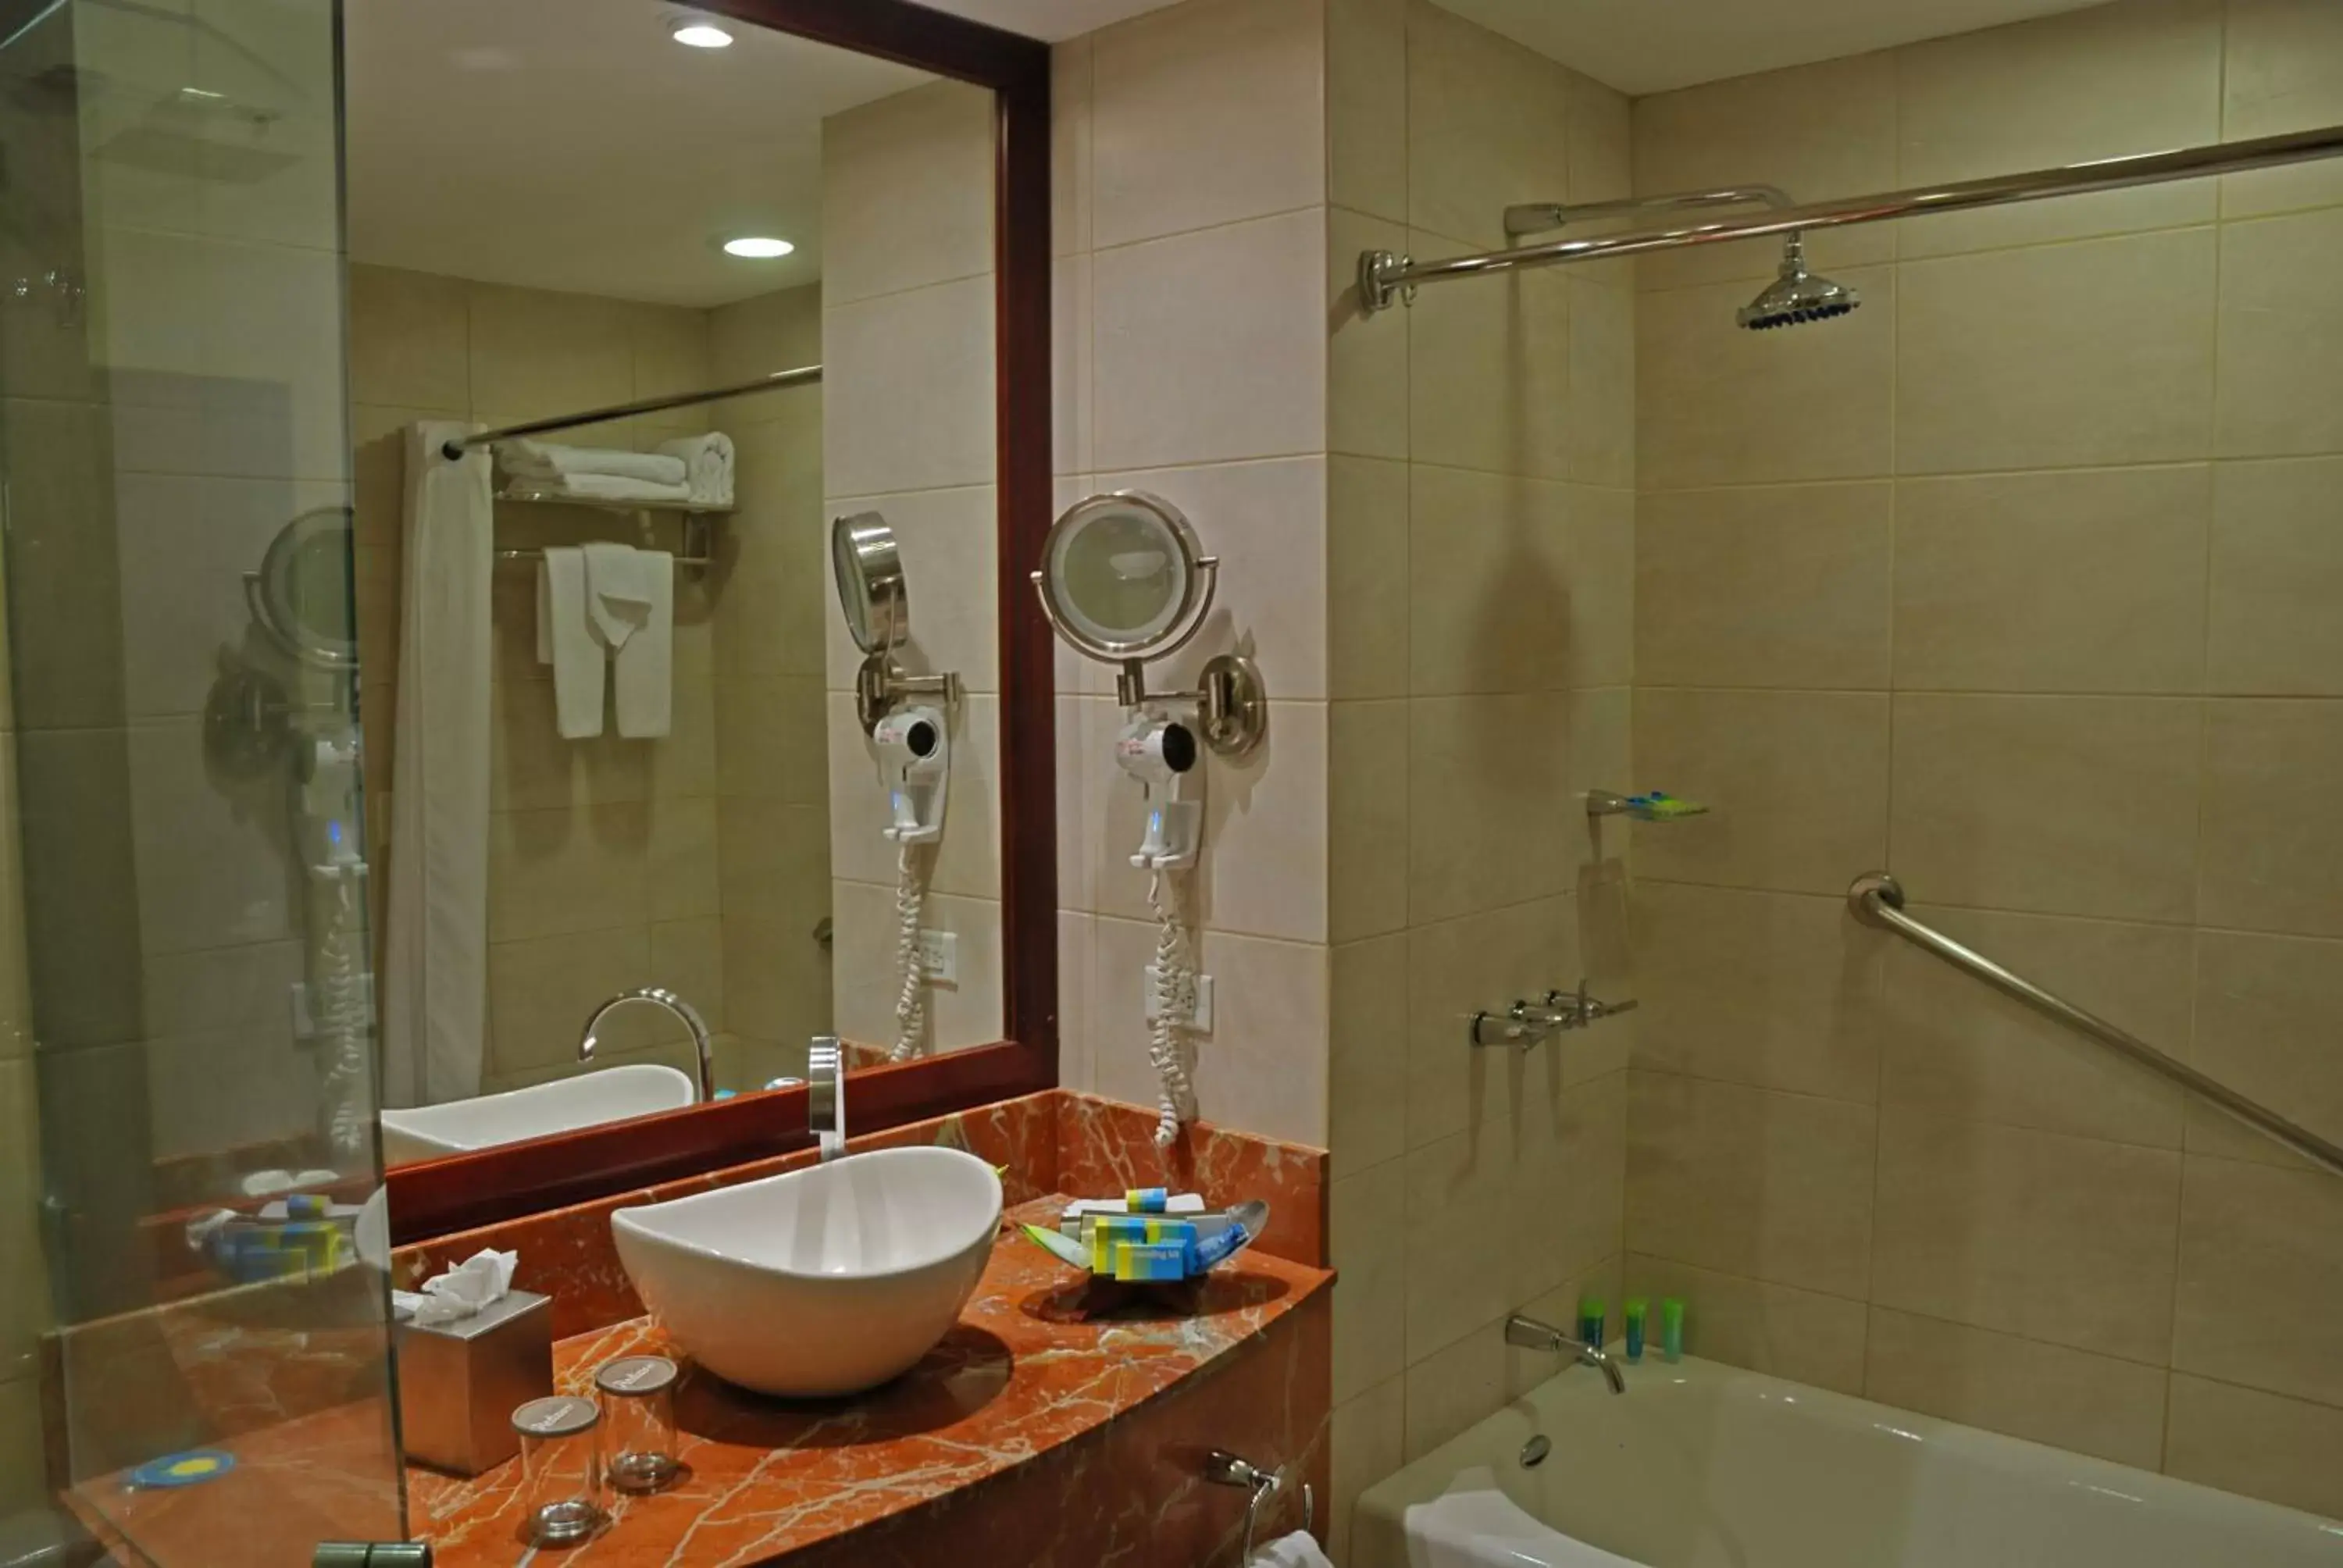 Bathroom in Radisson Hotel San Jose - Costa Rica